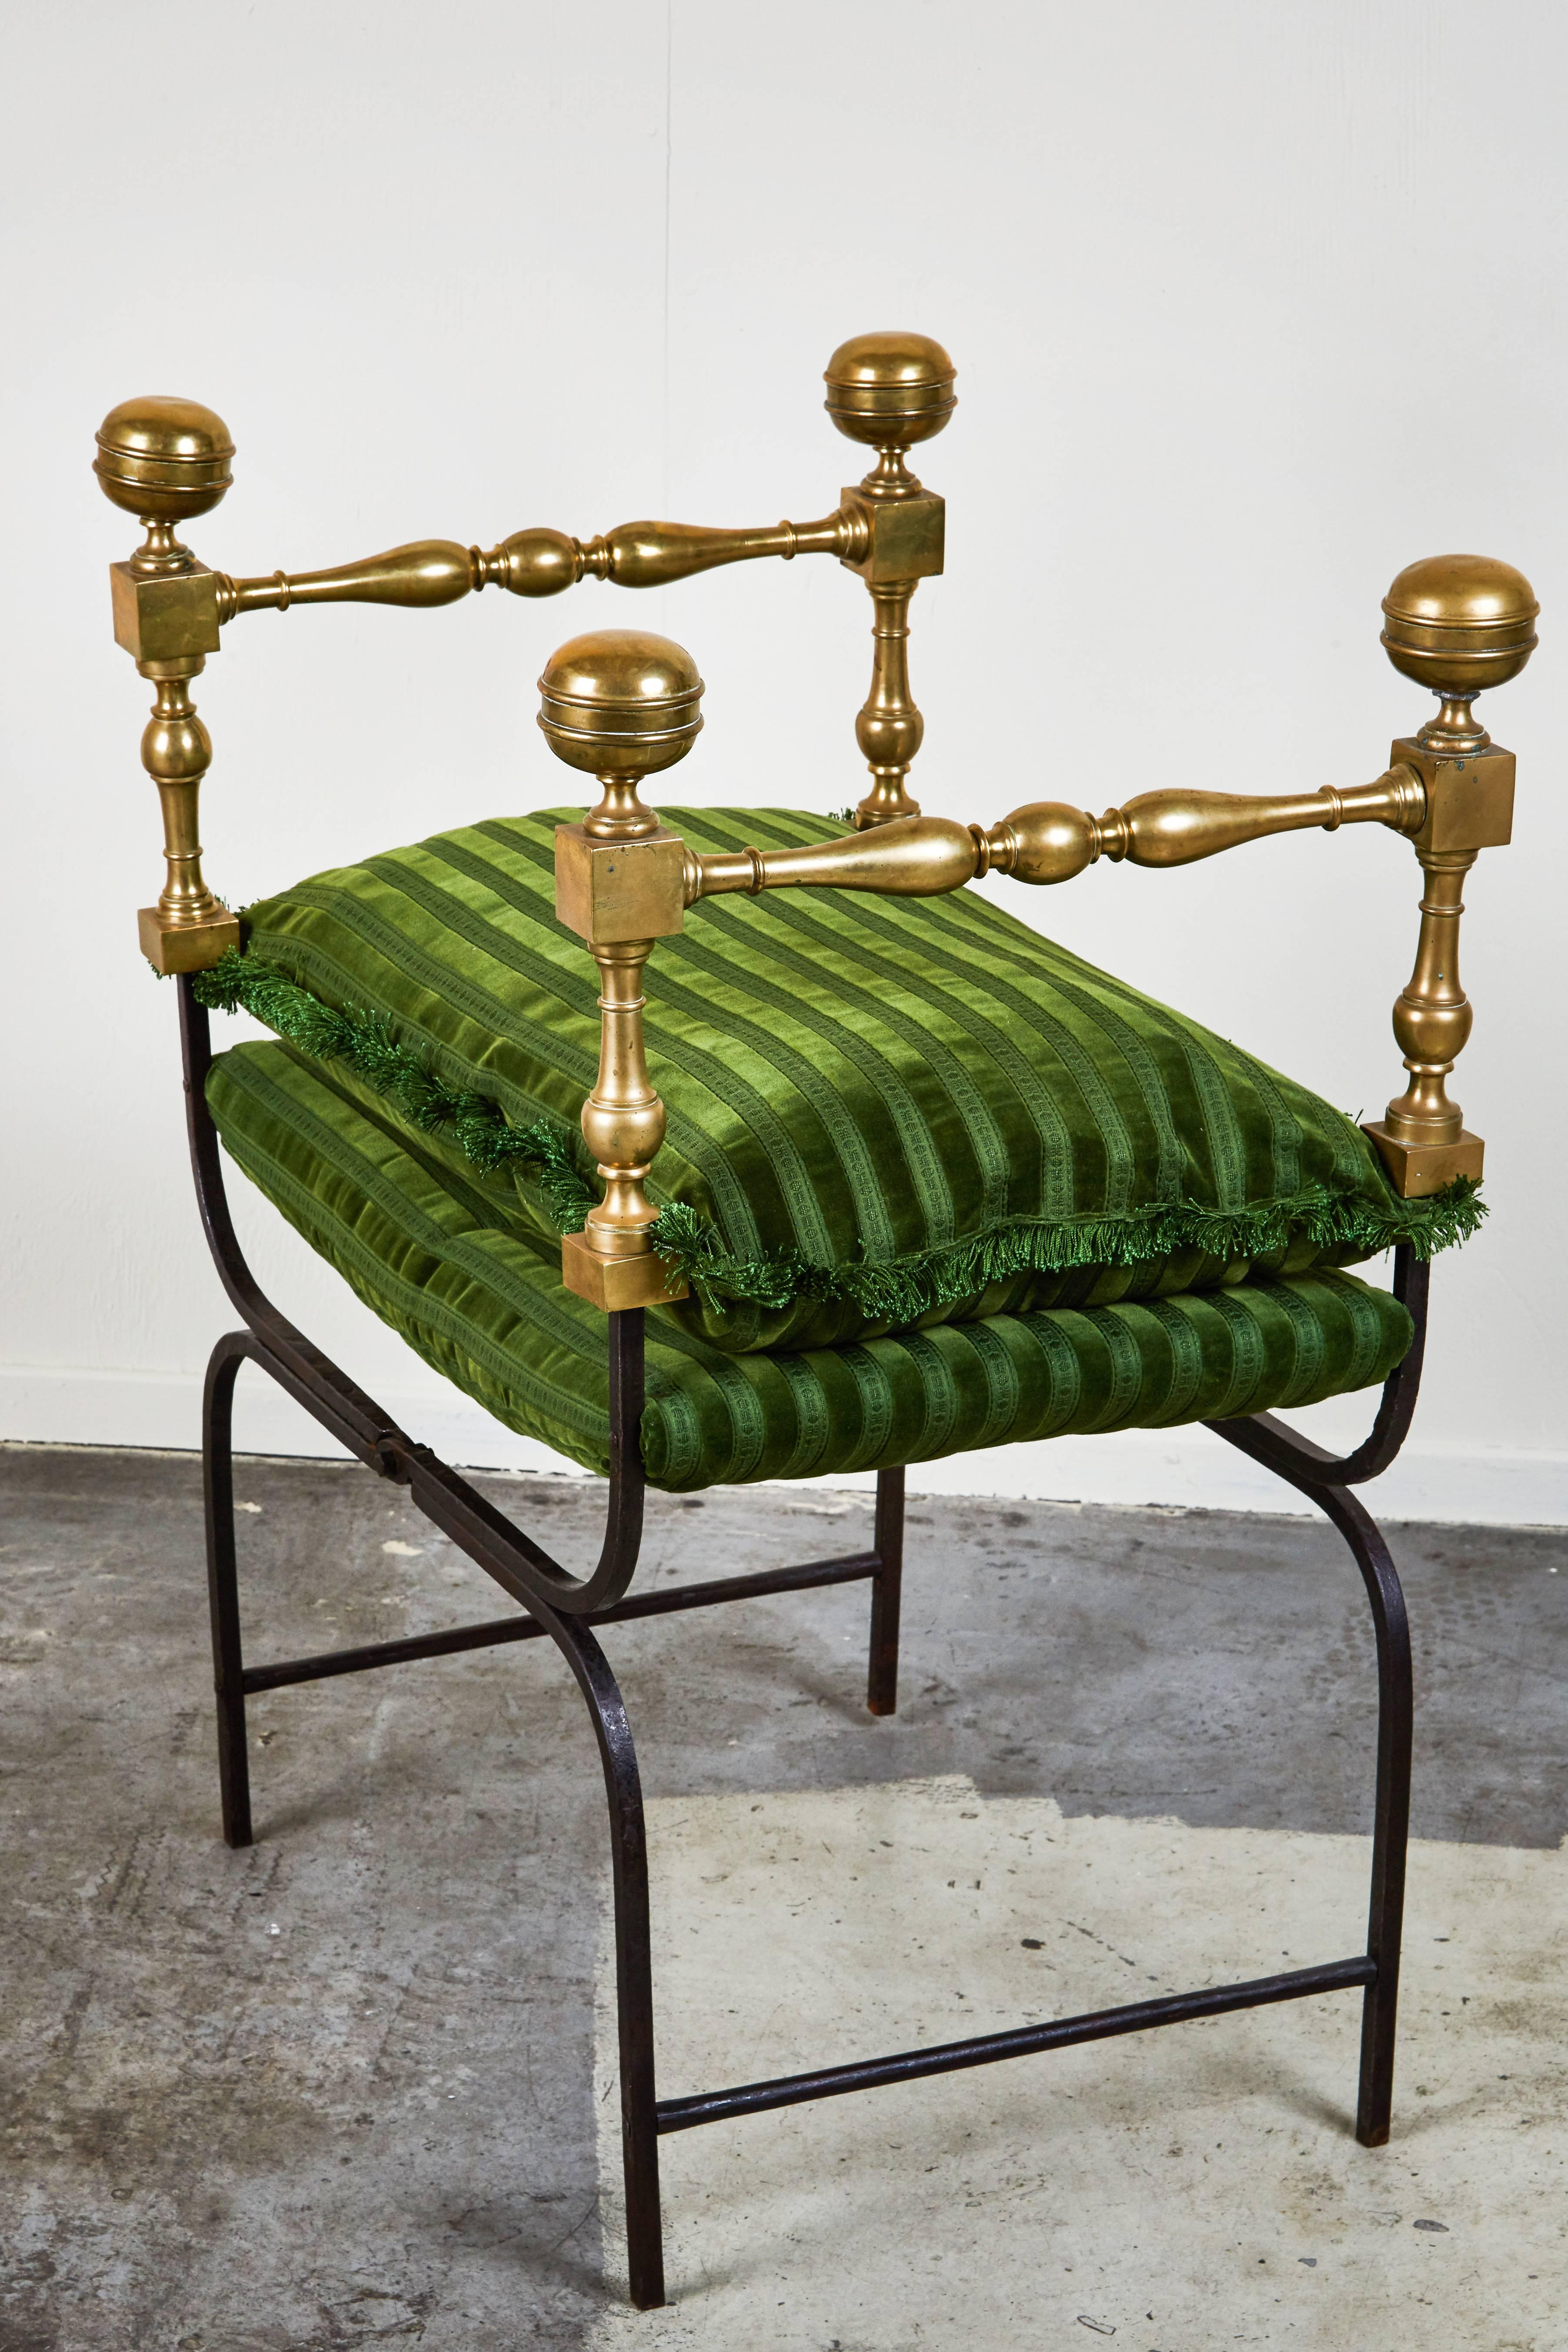 Polished Striking, 19th Century Iron and Brass Savanarola Chair